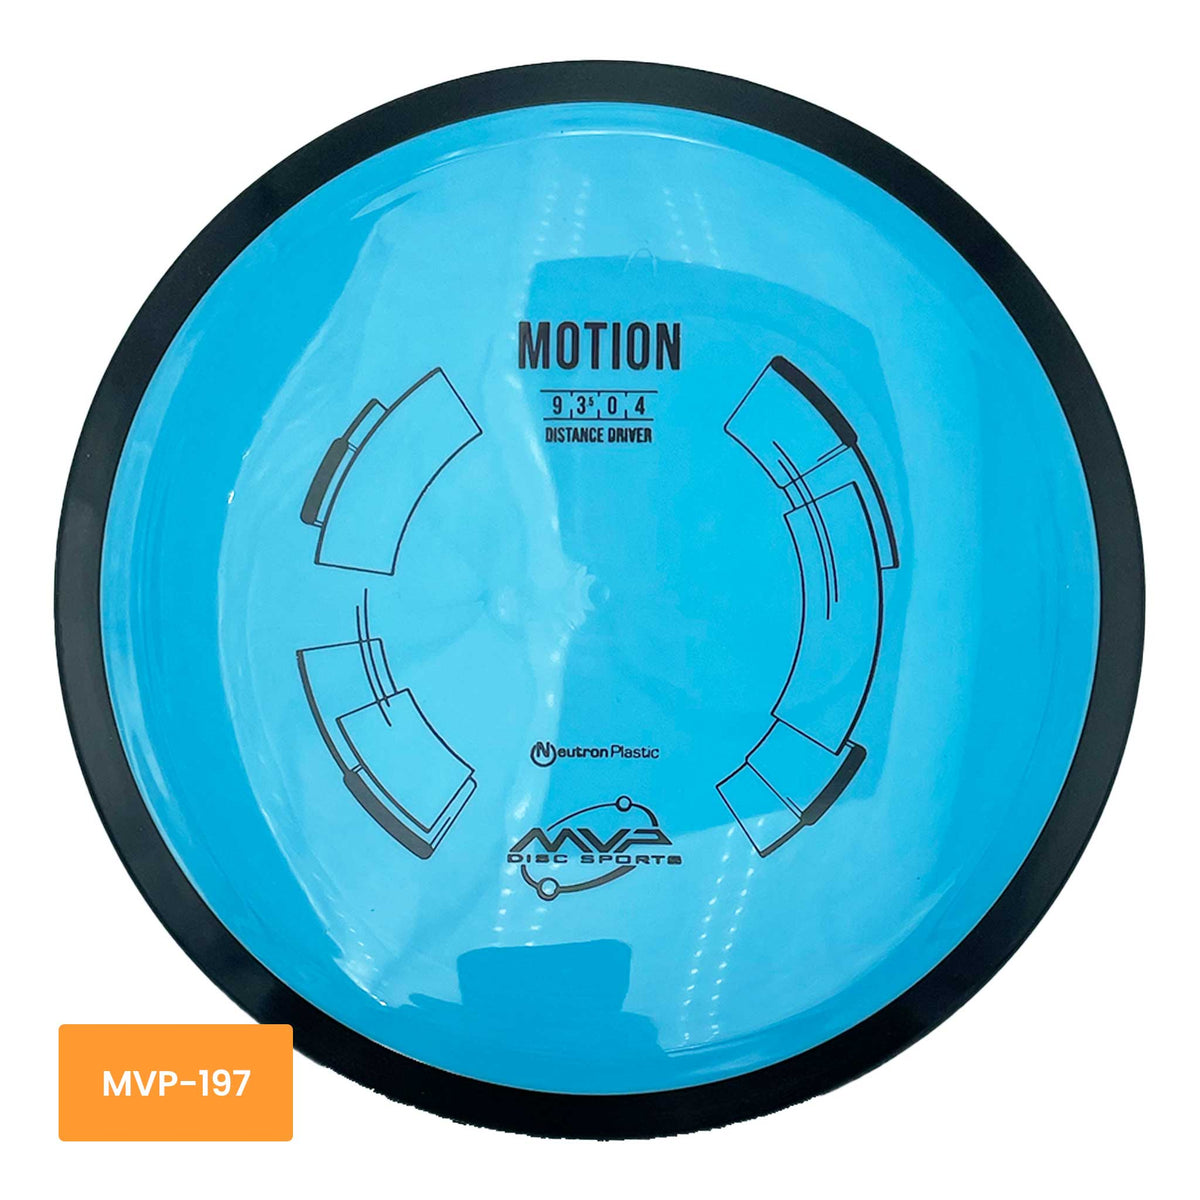 MVP Disc Sports Neutron Motion distance driver - Blue